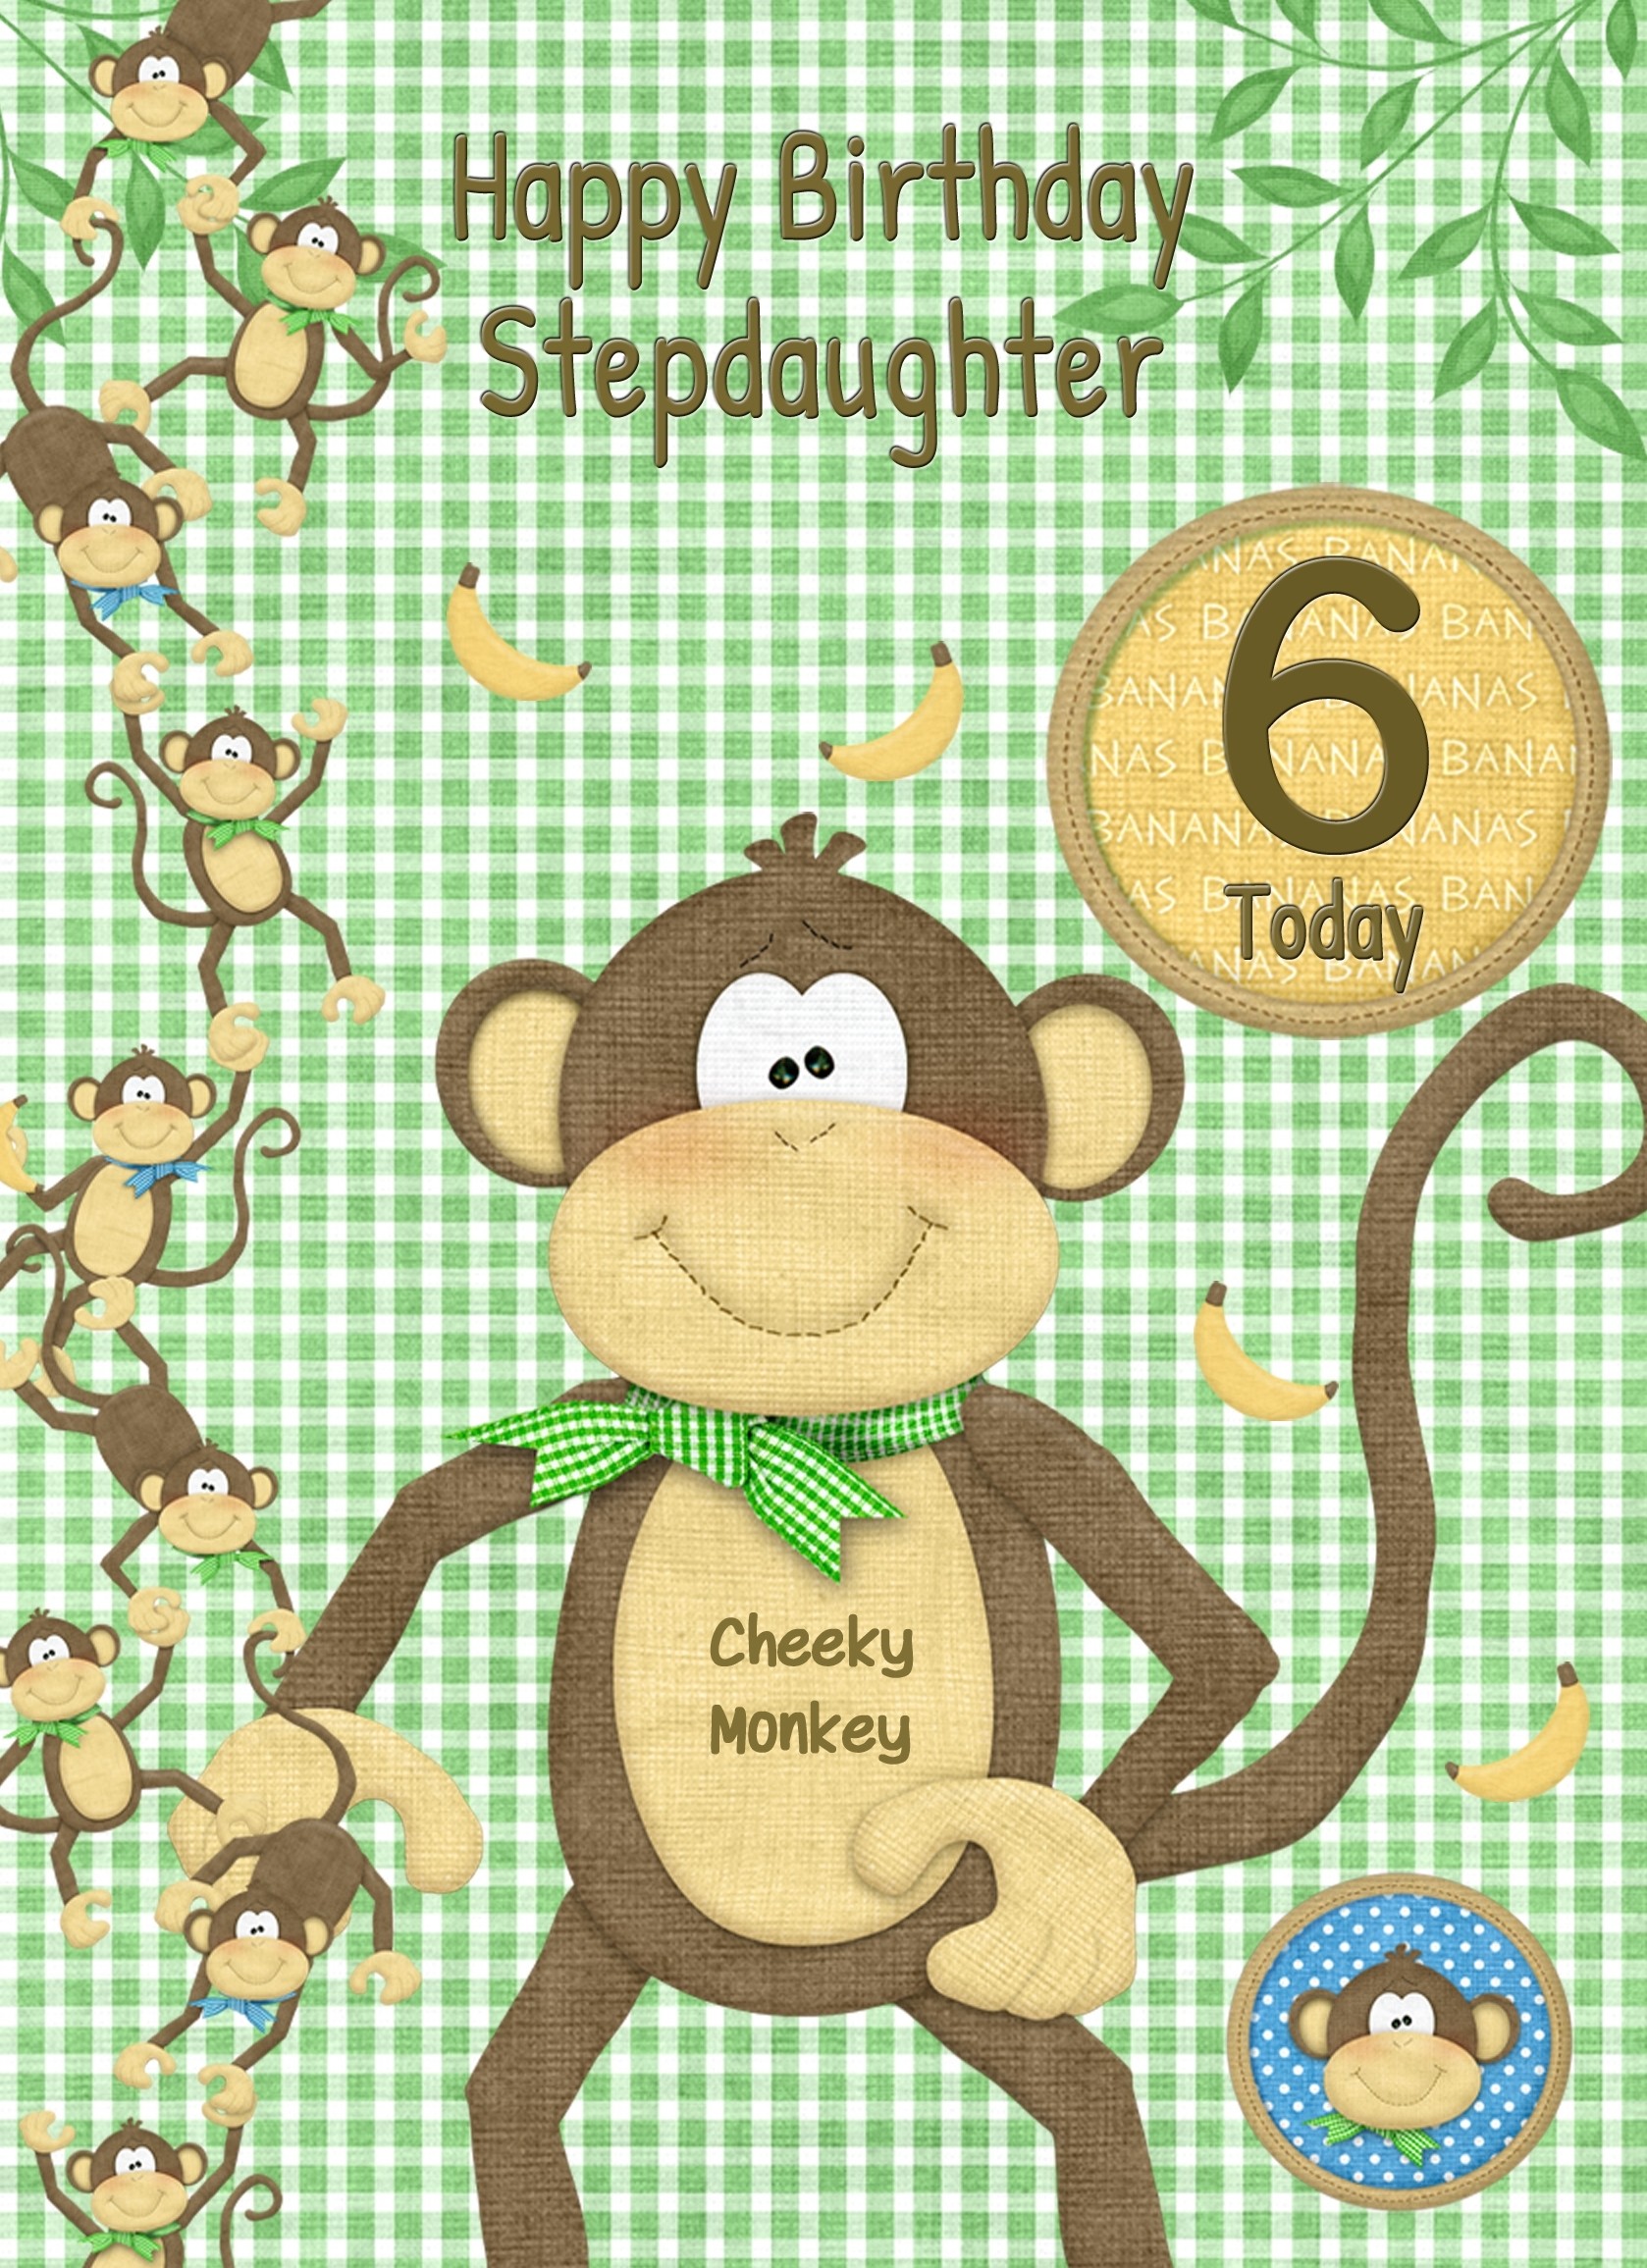 Kids 6th Birthday Cheeky Monkey Cartoon Card for Stepdaughter